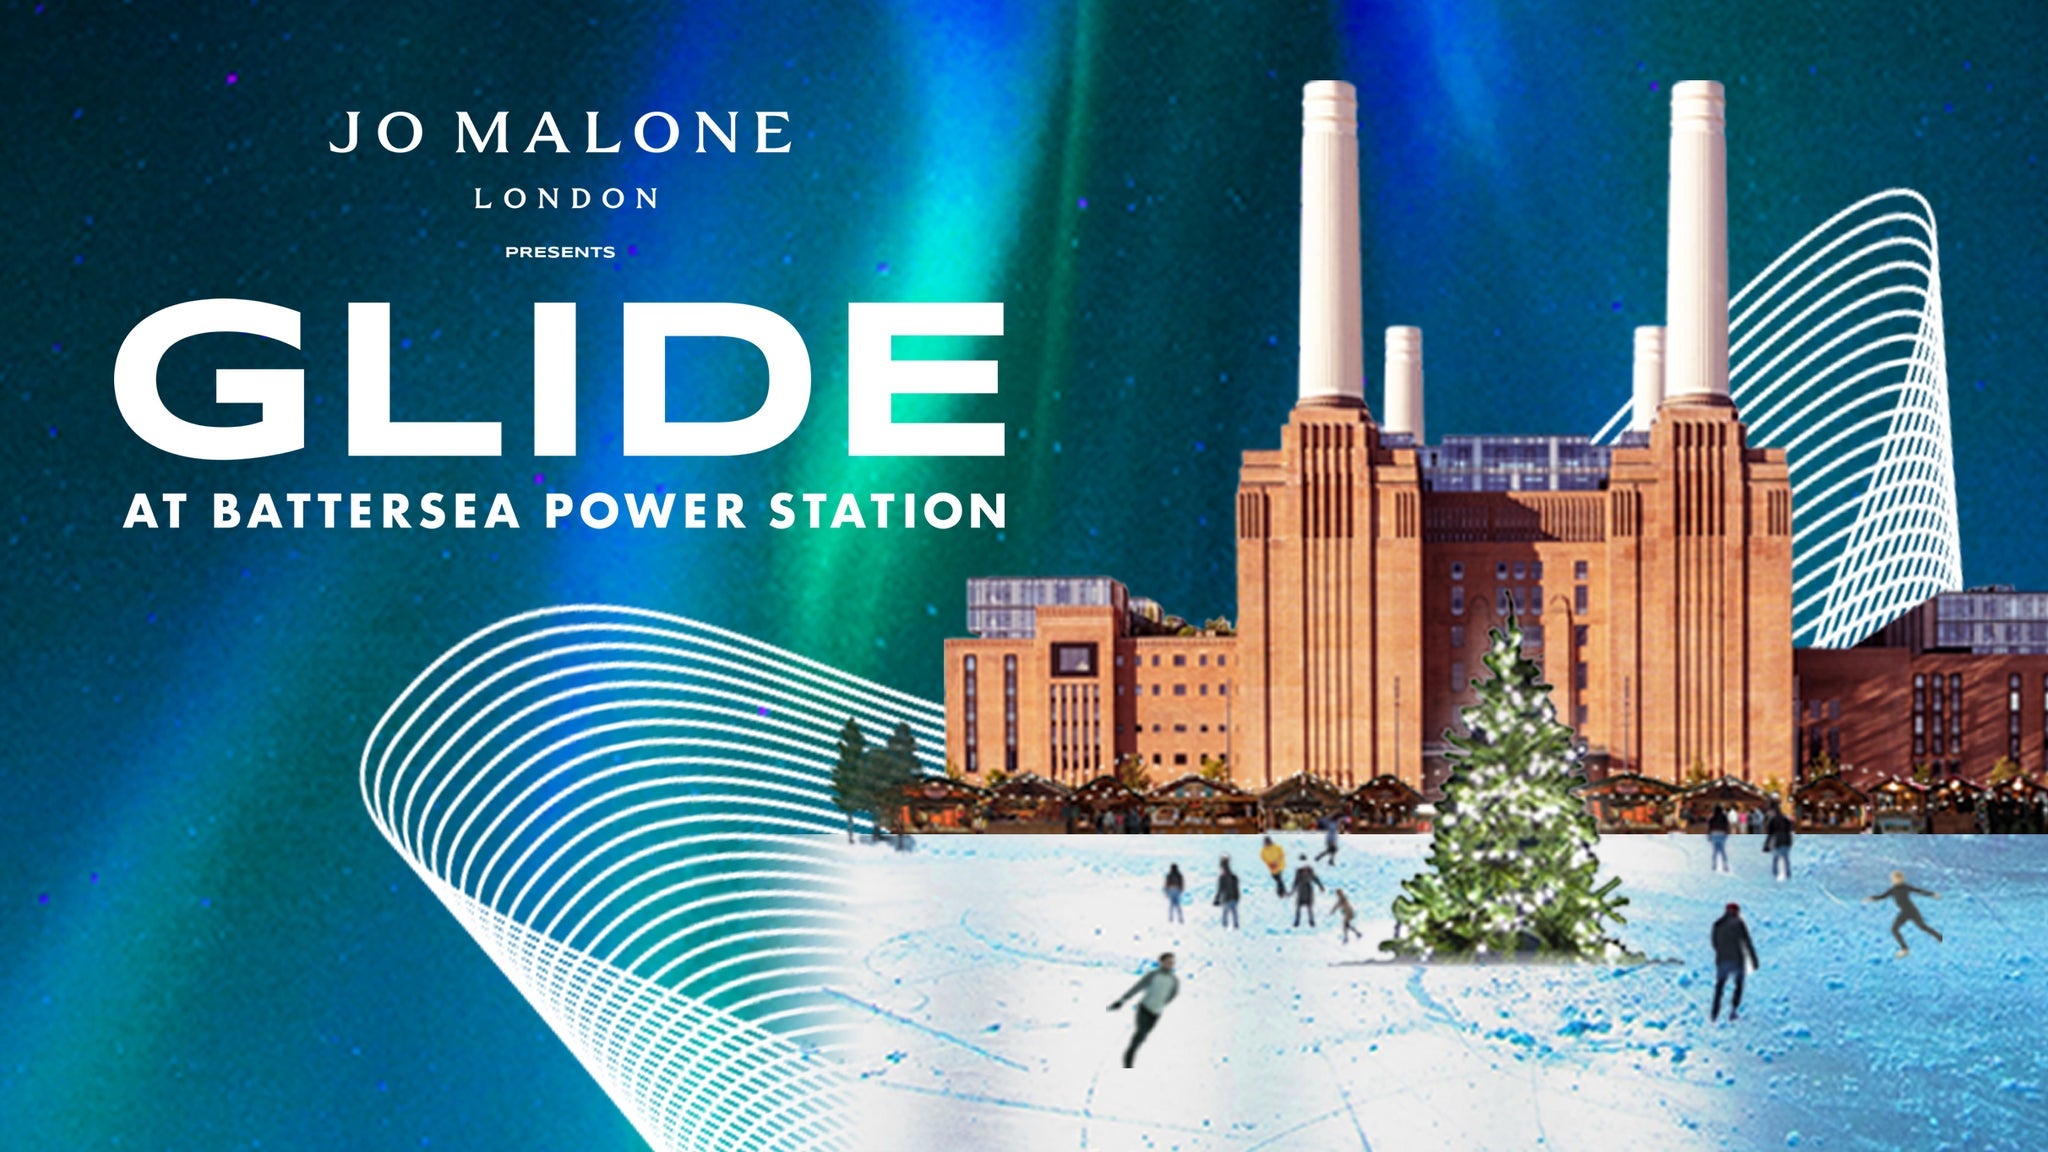 Jo Malone London Presents Glide at Battersea Power Station presale information on freepresalepasswords.com